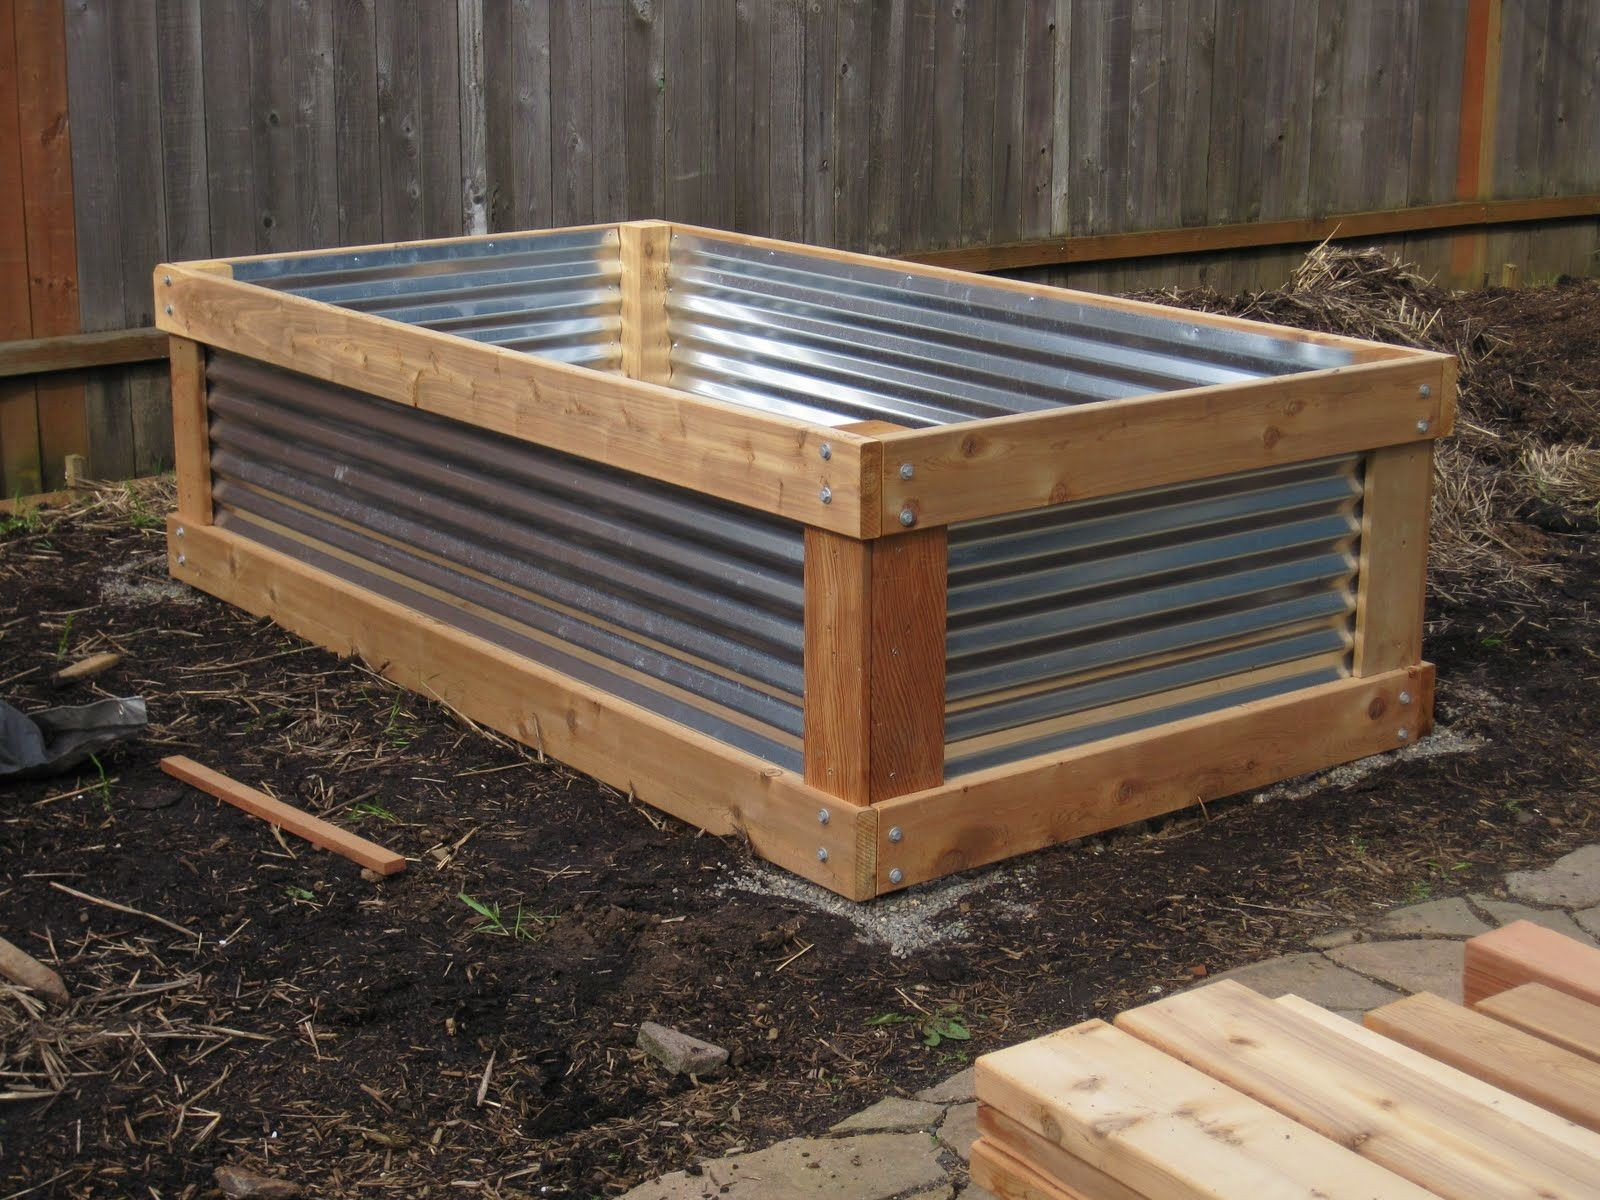 Best ideas about Vegetable Planter Box DIY
. Save or Pin raised ve able planter box plans raised garden box Now.